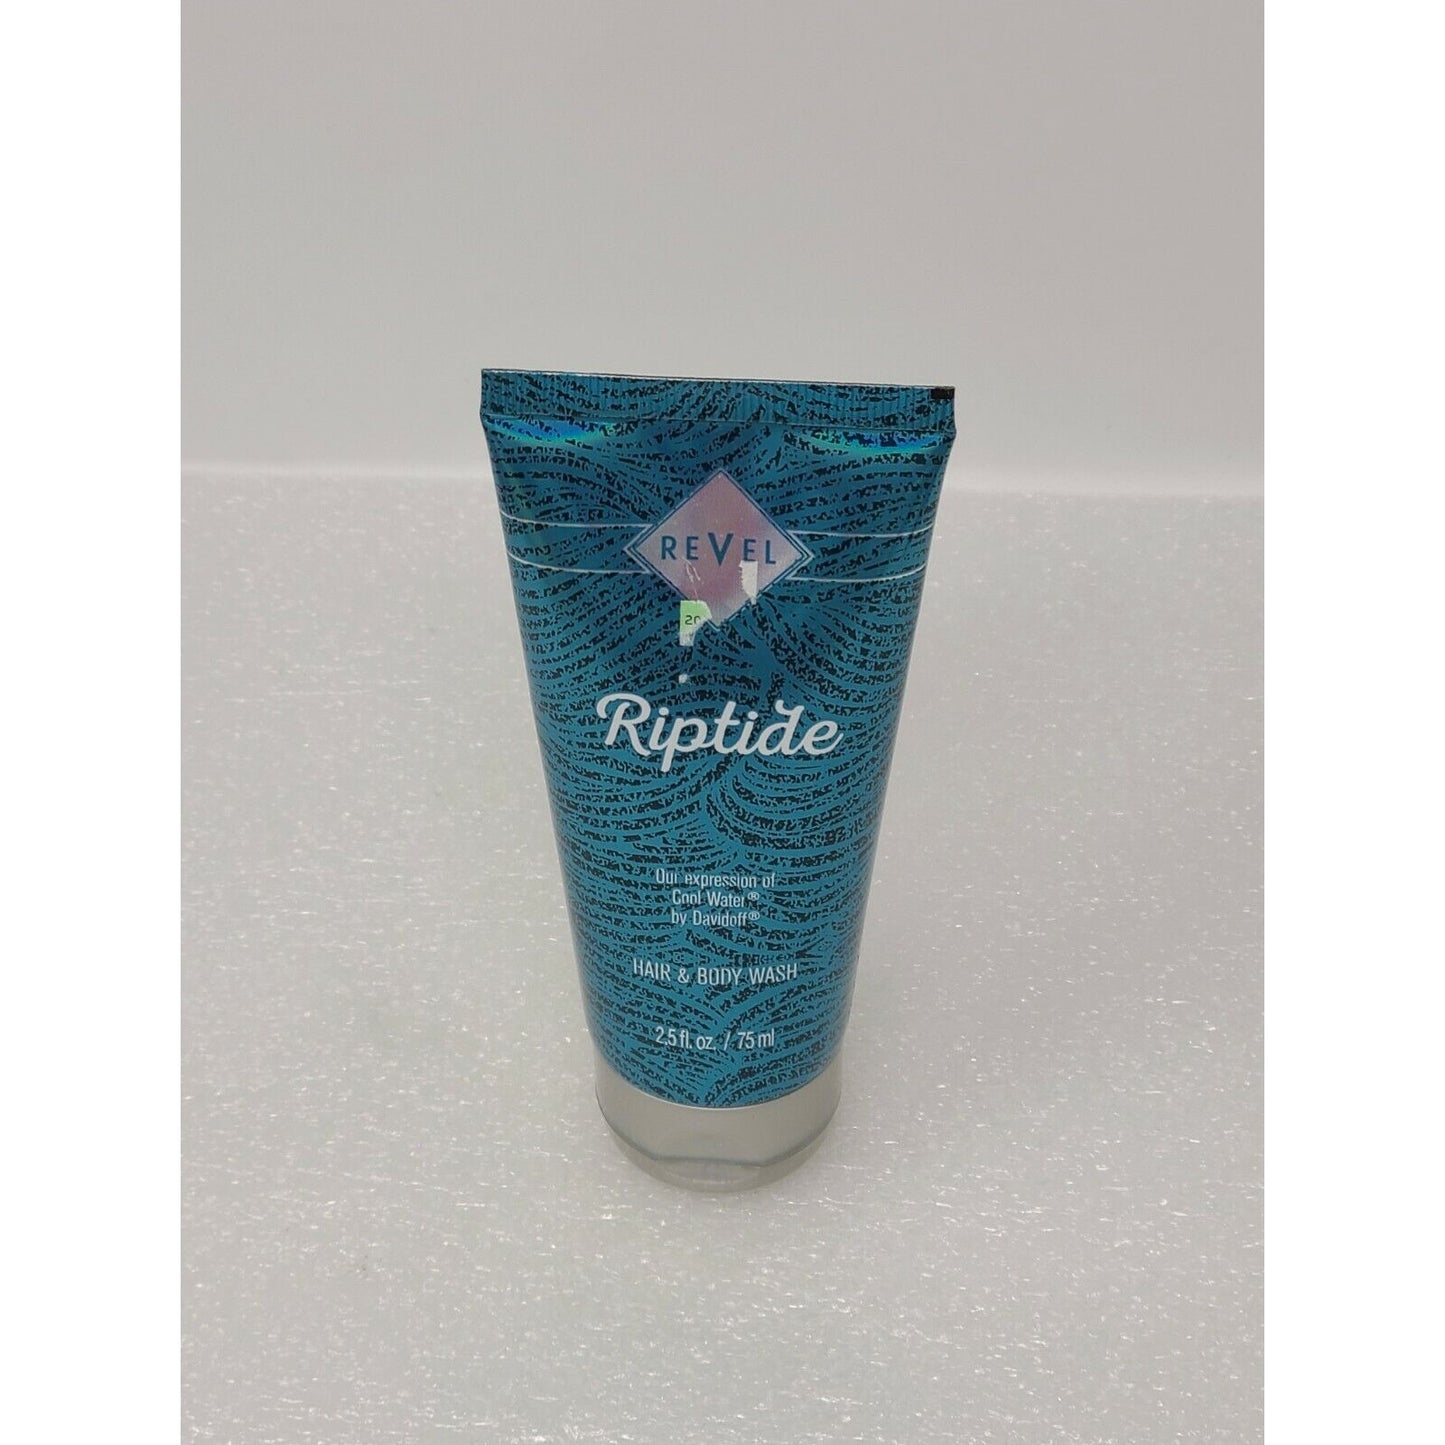 Revel Riptide Hair & Body Wash 2.5 oz